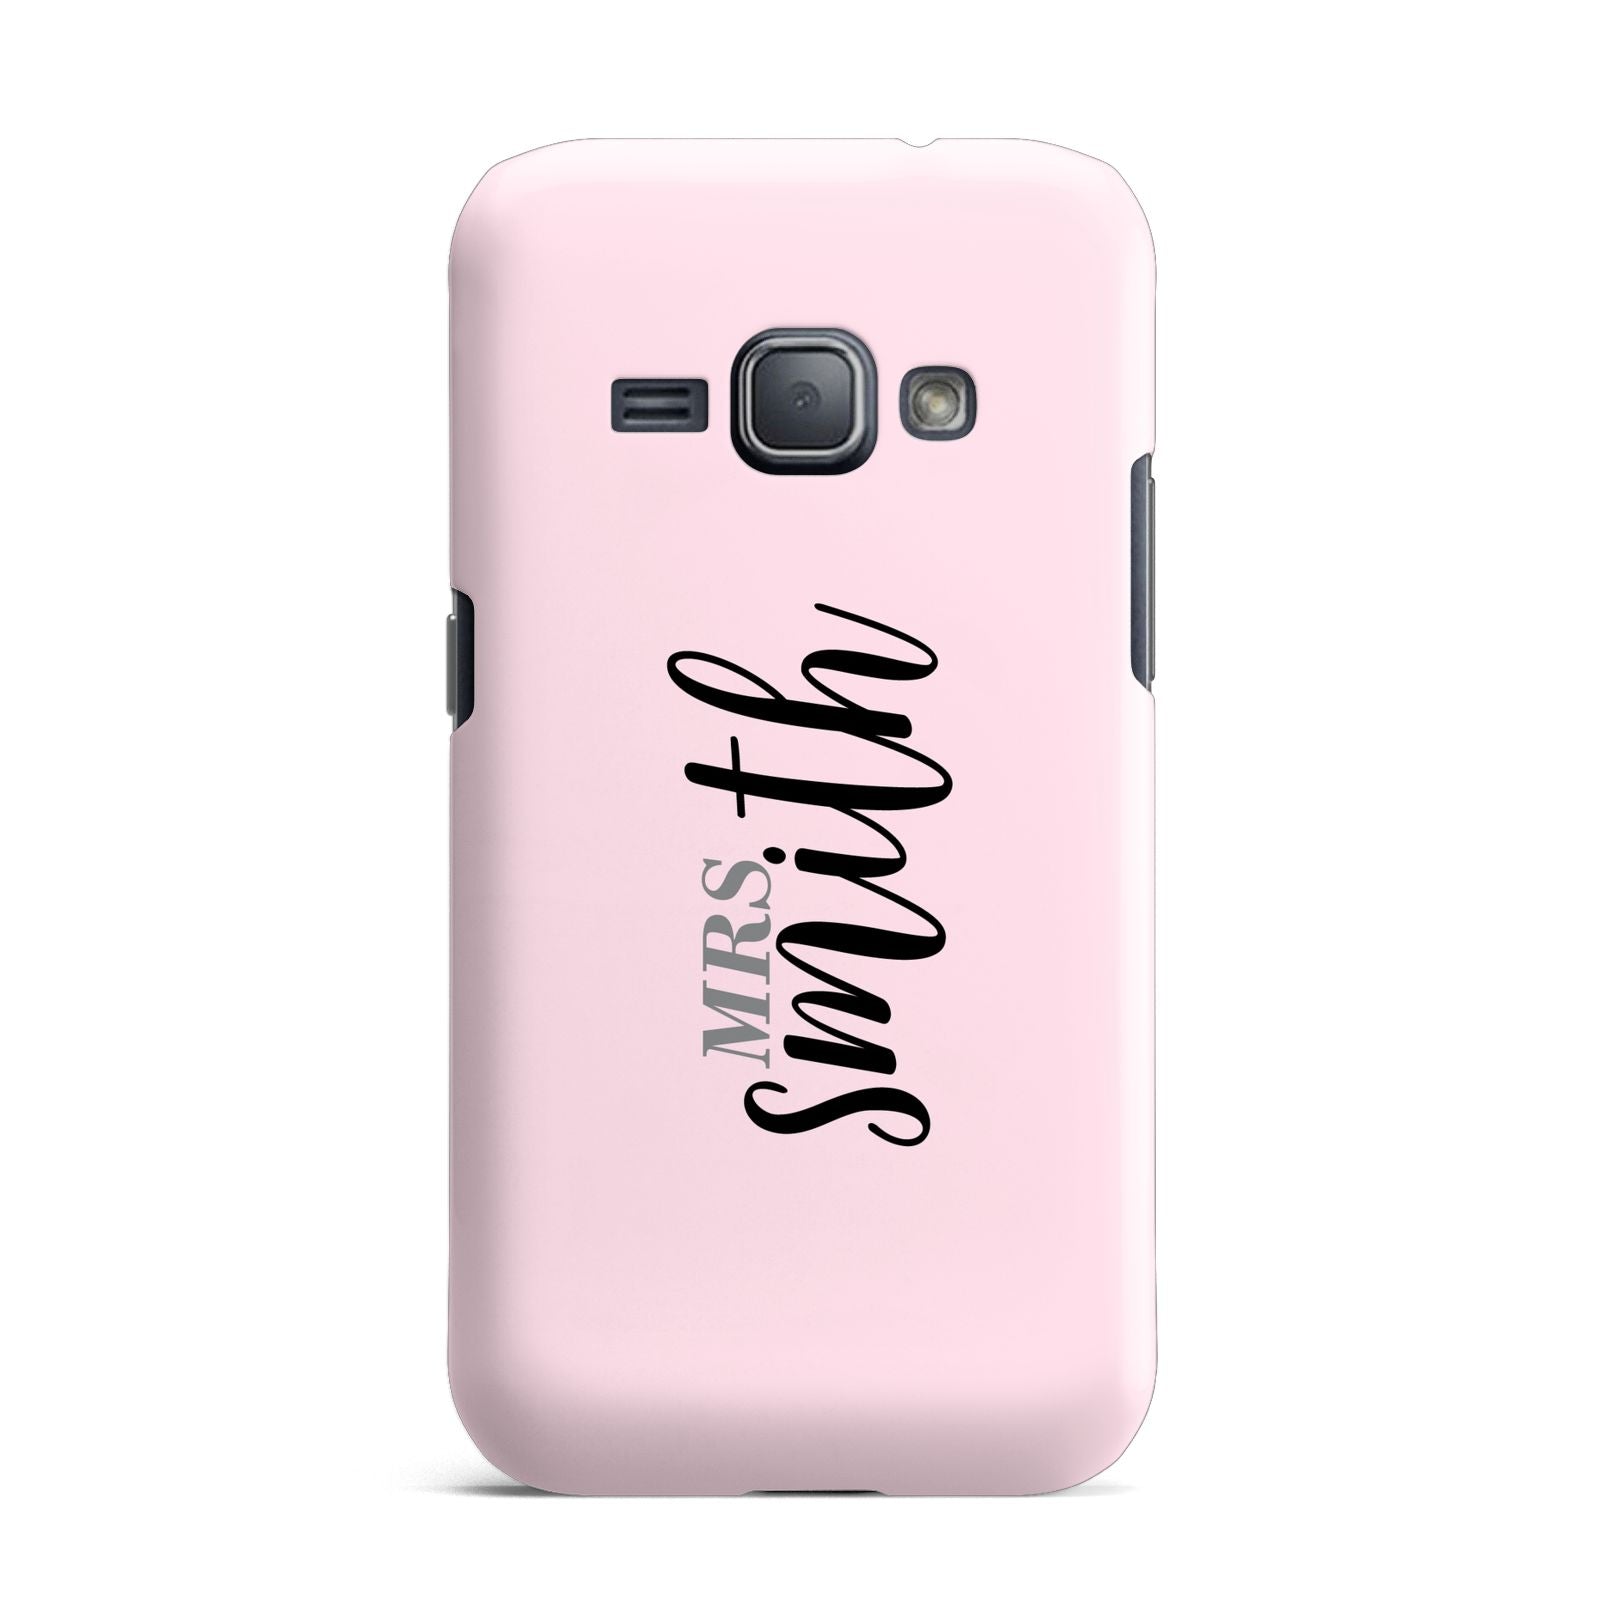 Personalised Bridal Samsung Galaxy J1 2016 Case